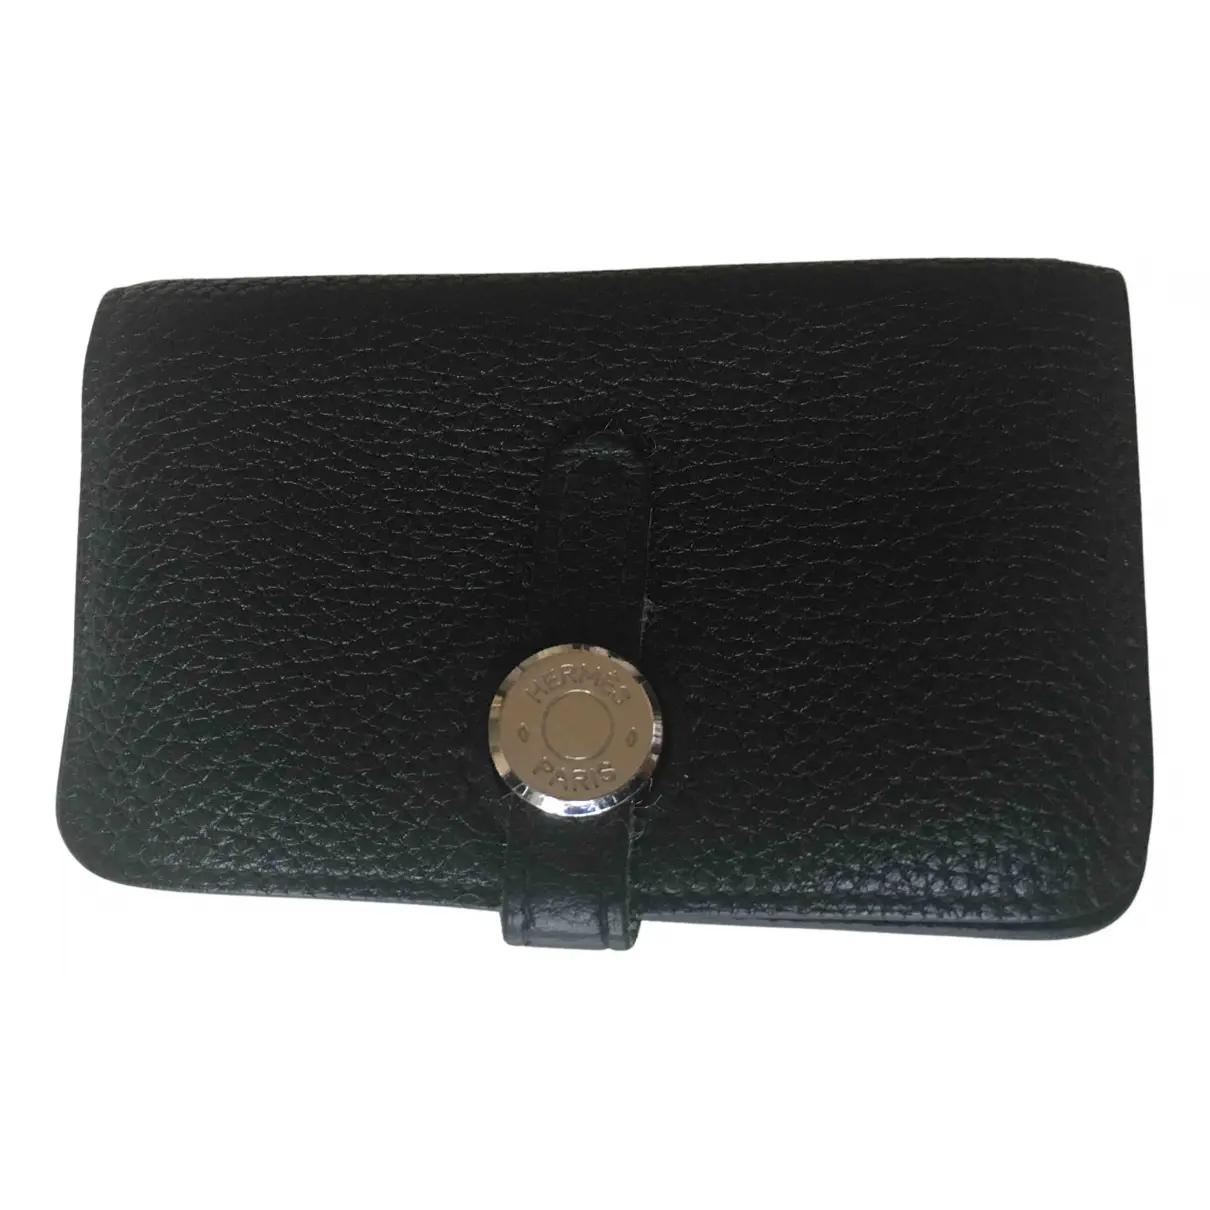 Dogon leather card wallet Hermès